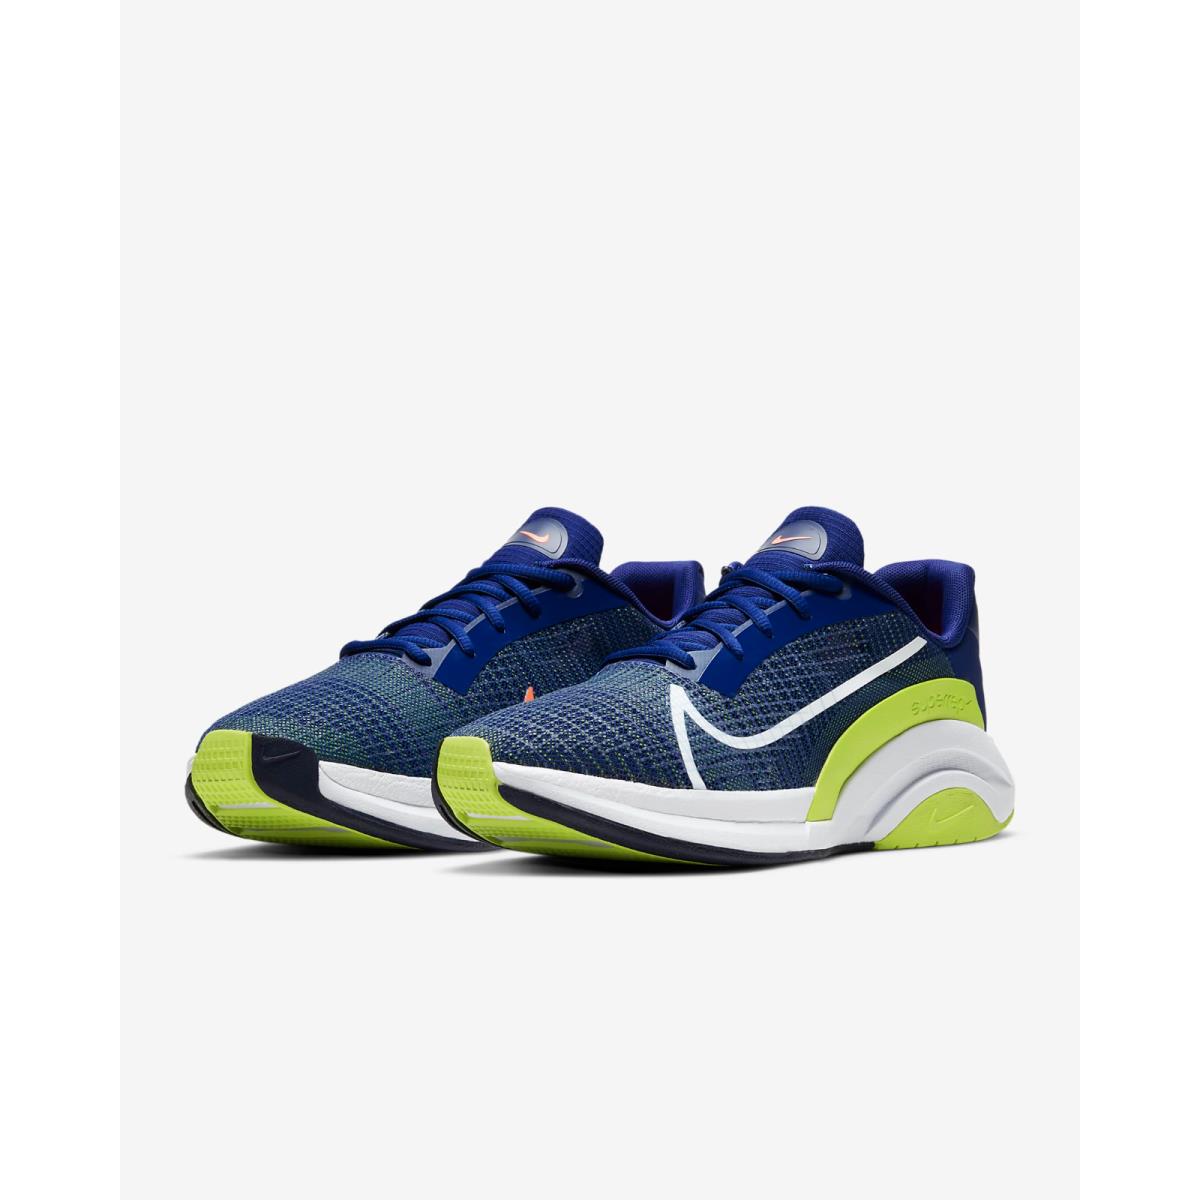 Nike shoes ZoomX SuperRep Surge - Deep Royal Blue/Cyber/Bright Mango/White 5